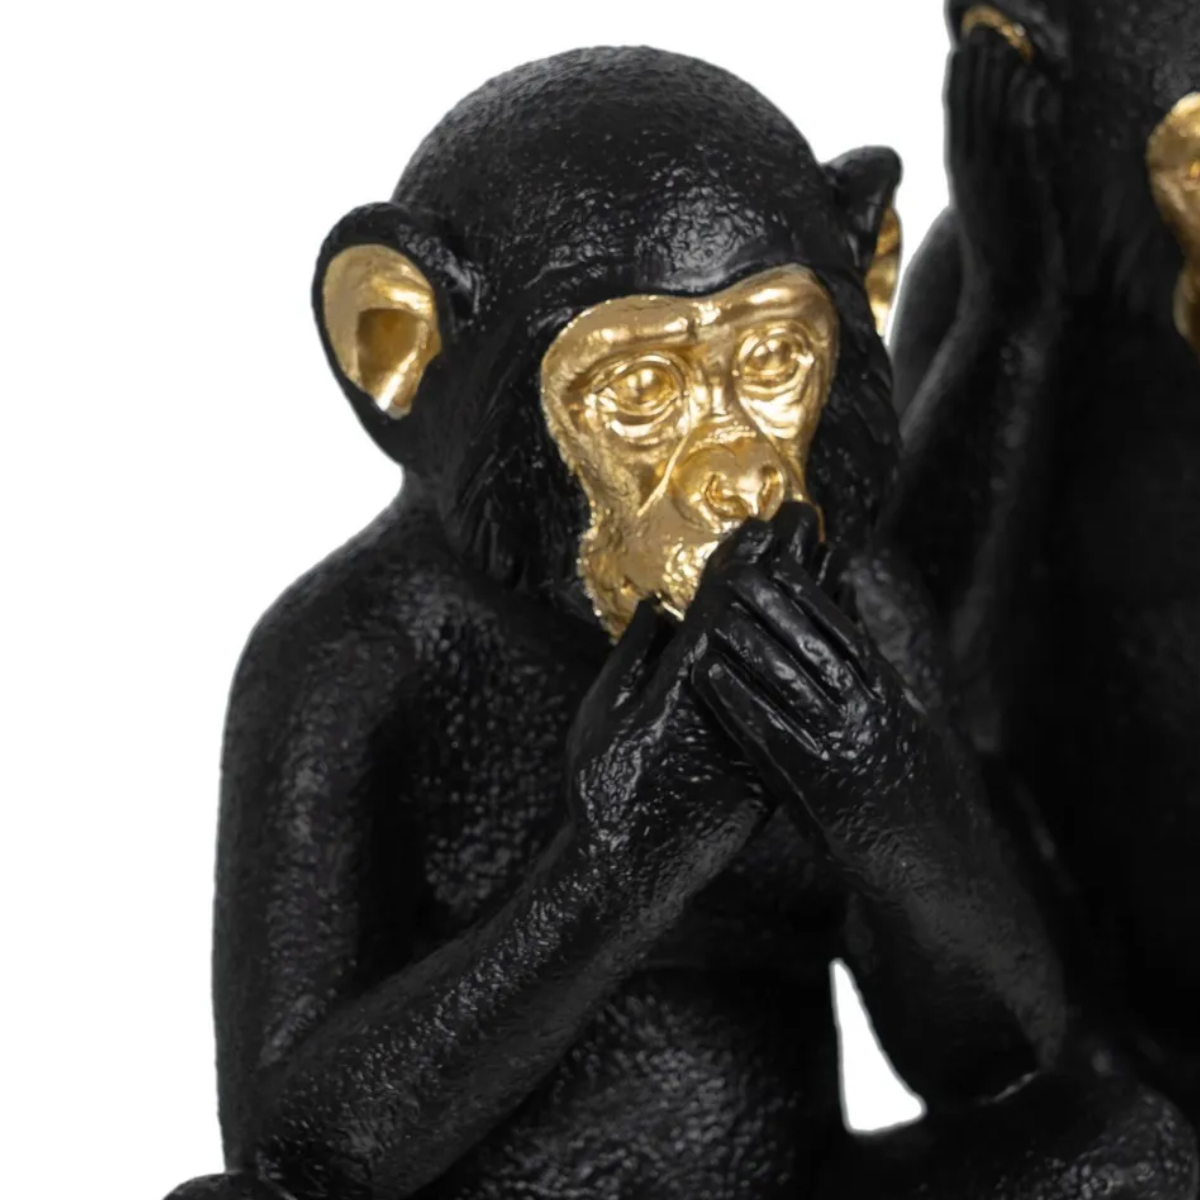 Set of 3 black and gold wisdom monkey figurines